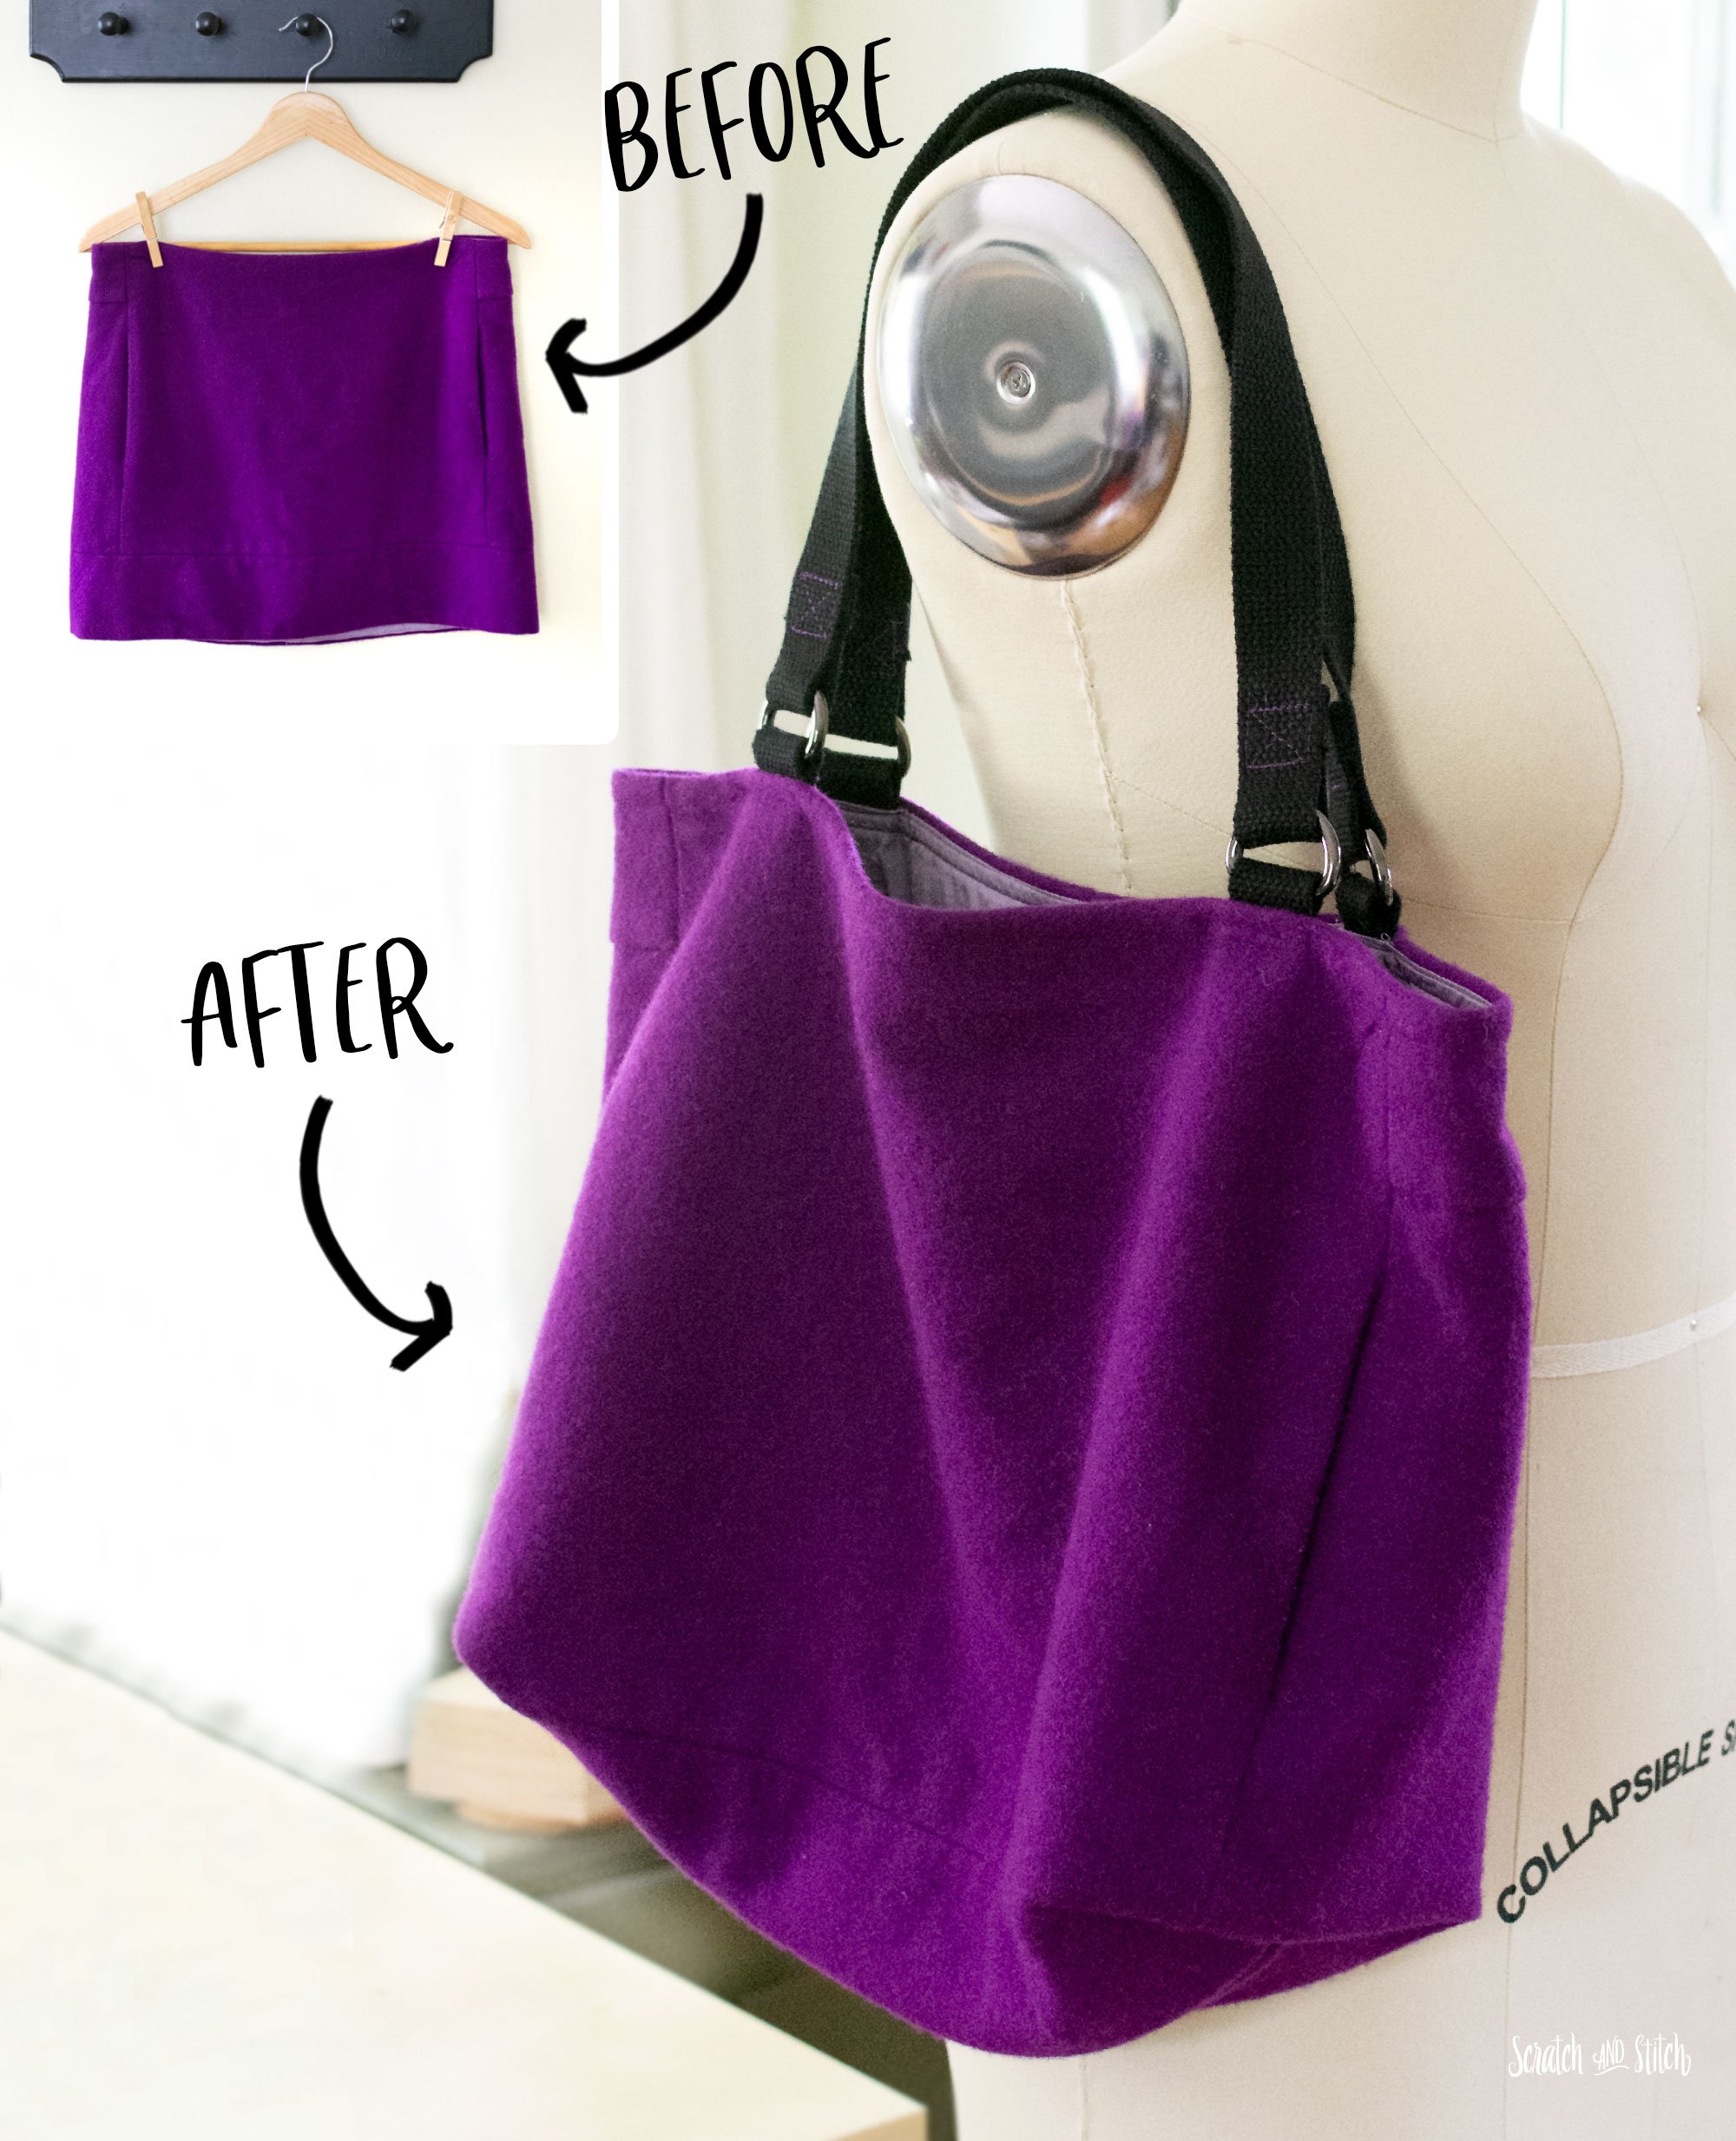 How to sew a cute new tote bag using denim scraps